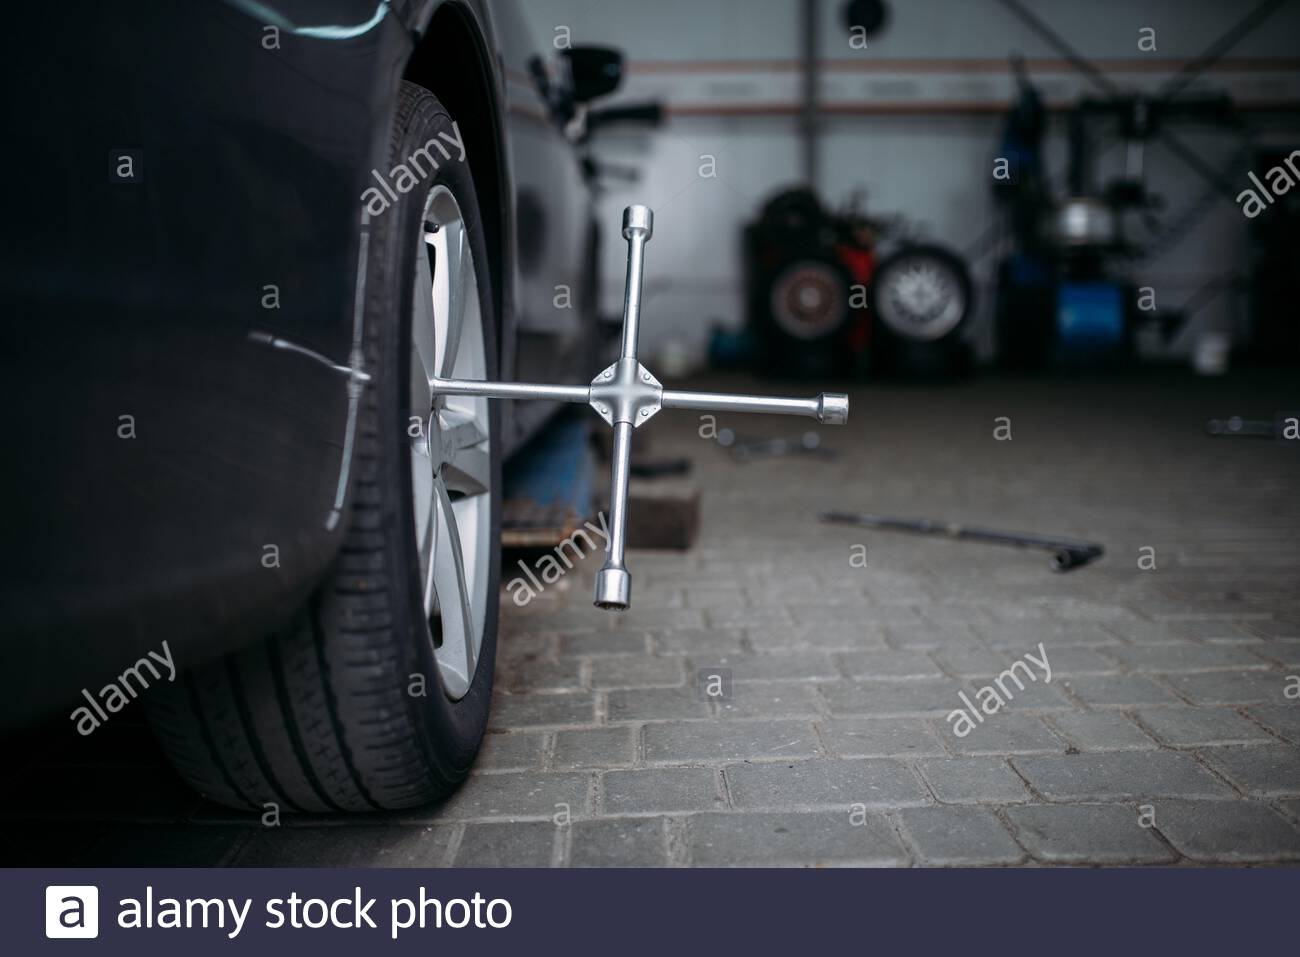 car tyre tools